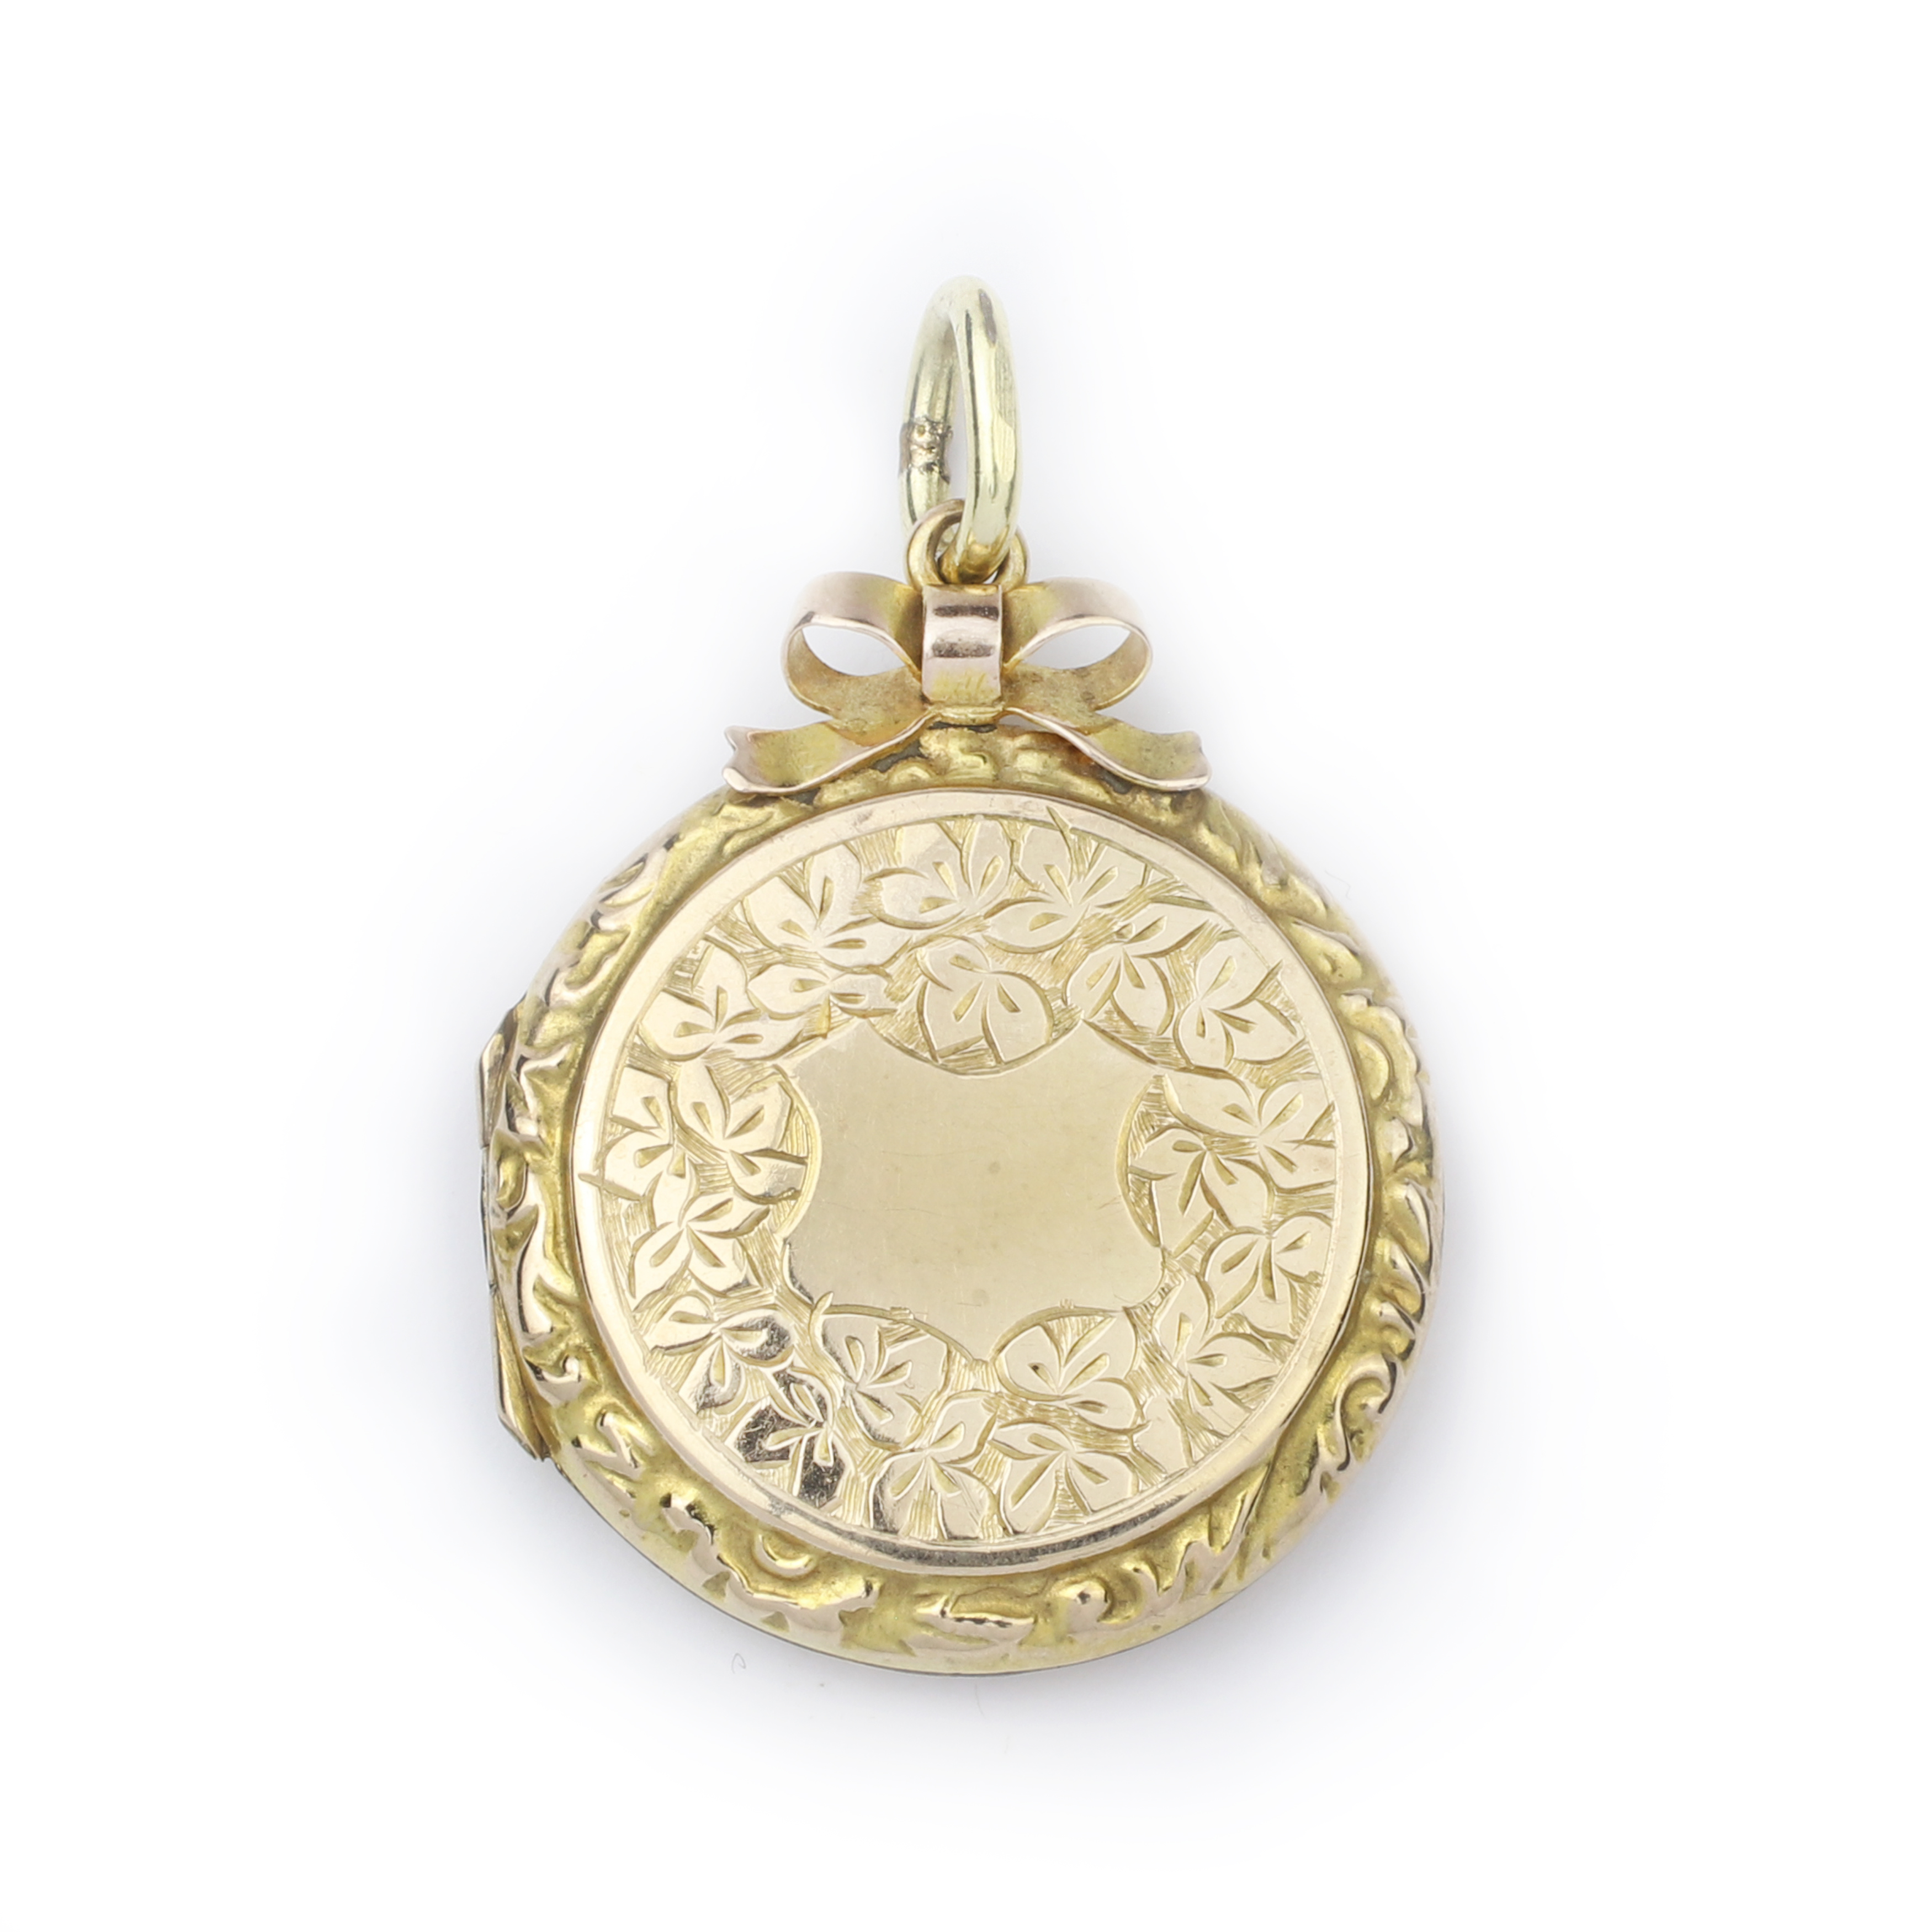 An Antique Circular Shaped Gold Locket Pendant - FD Gallery